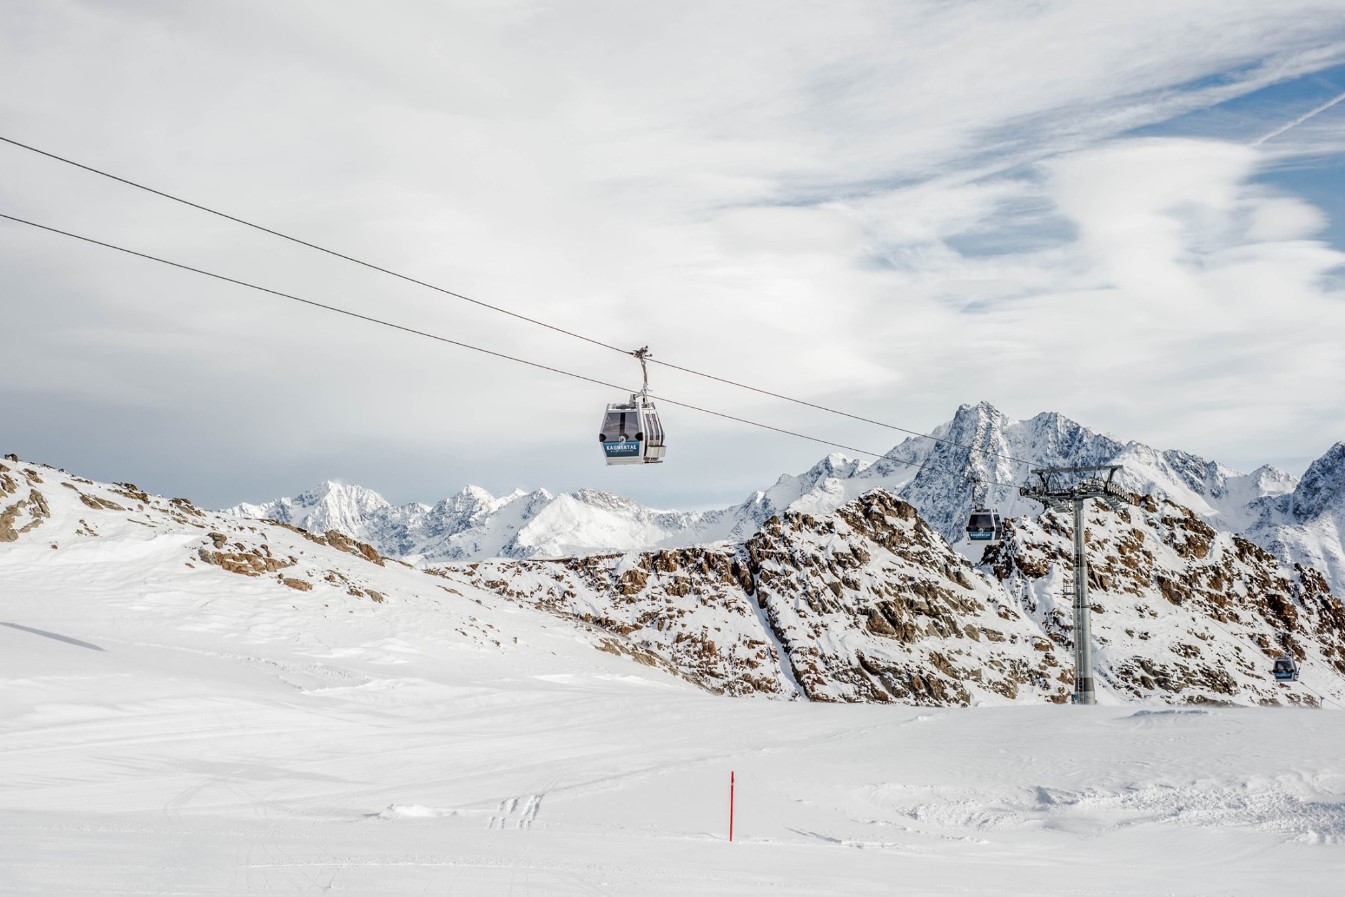 Kaunertal Glacier Ski Resort Austria